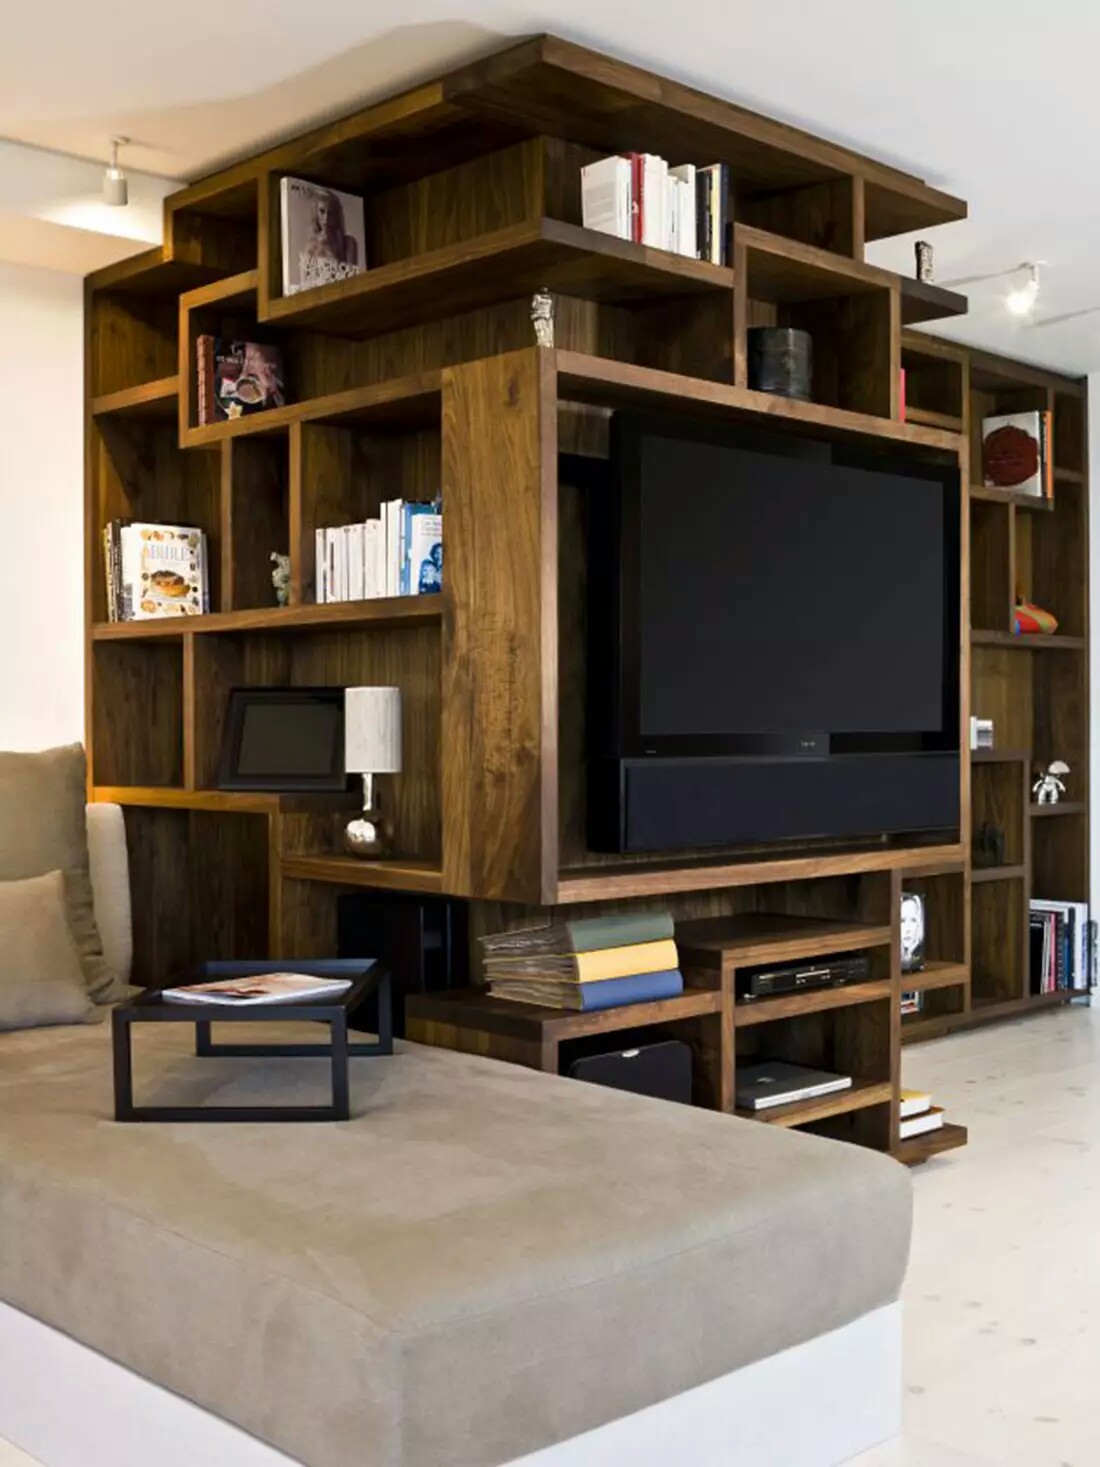 Beautiful Bookshelves Design | My Decorative